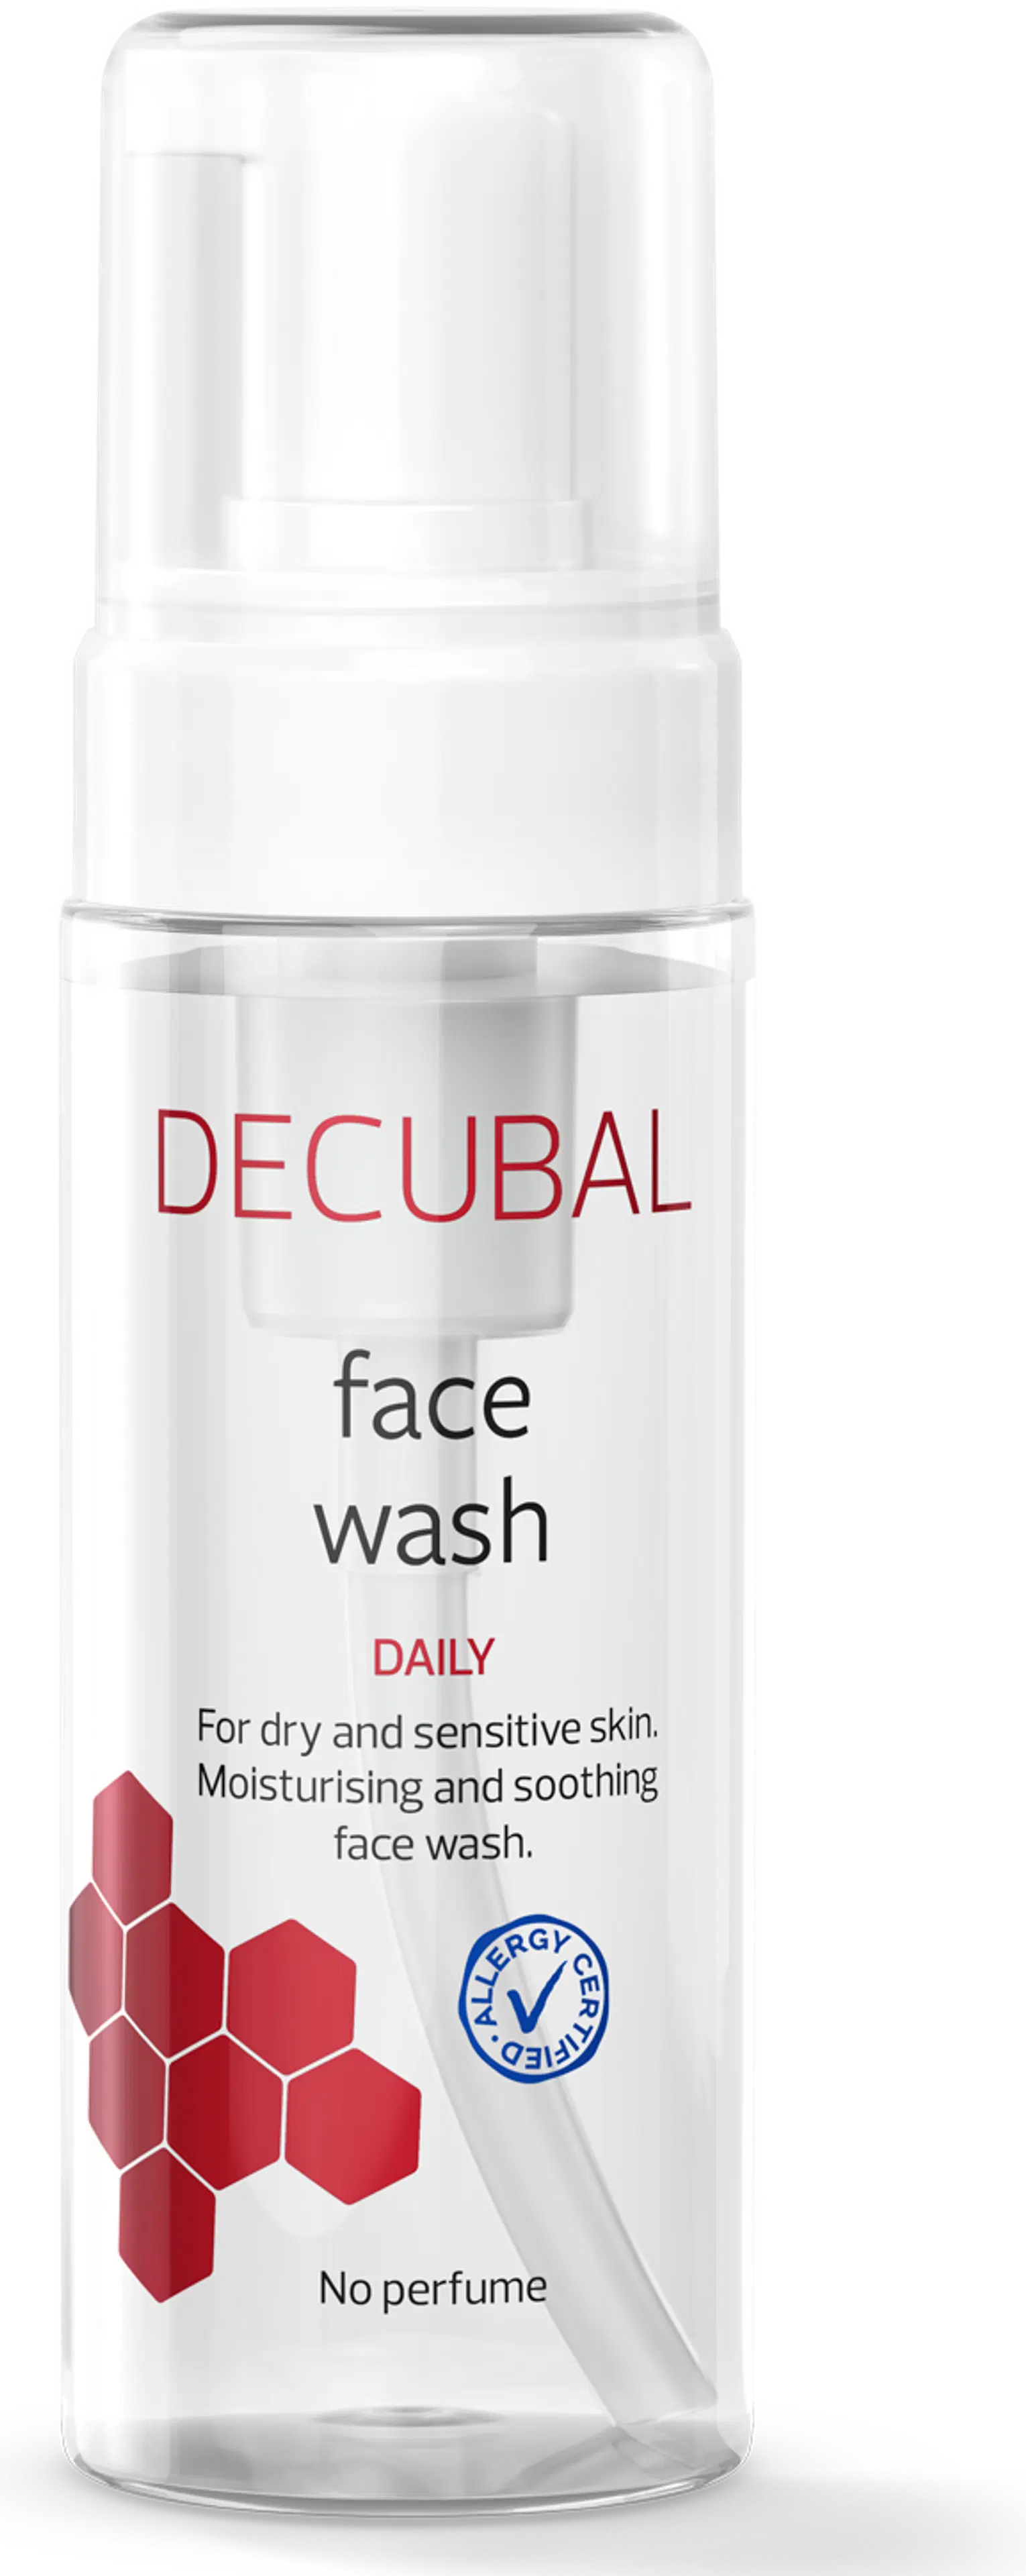 Decubal Face Wash puhdistusvaahto 150 ml